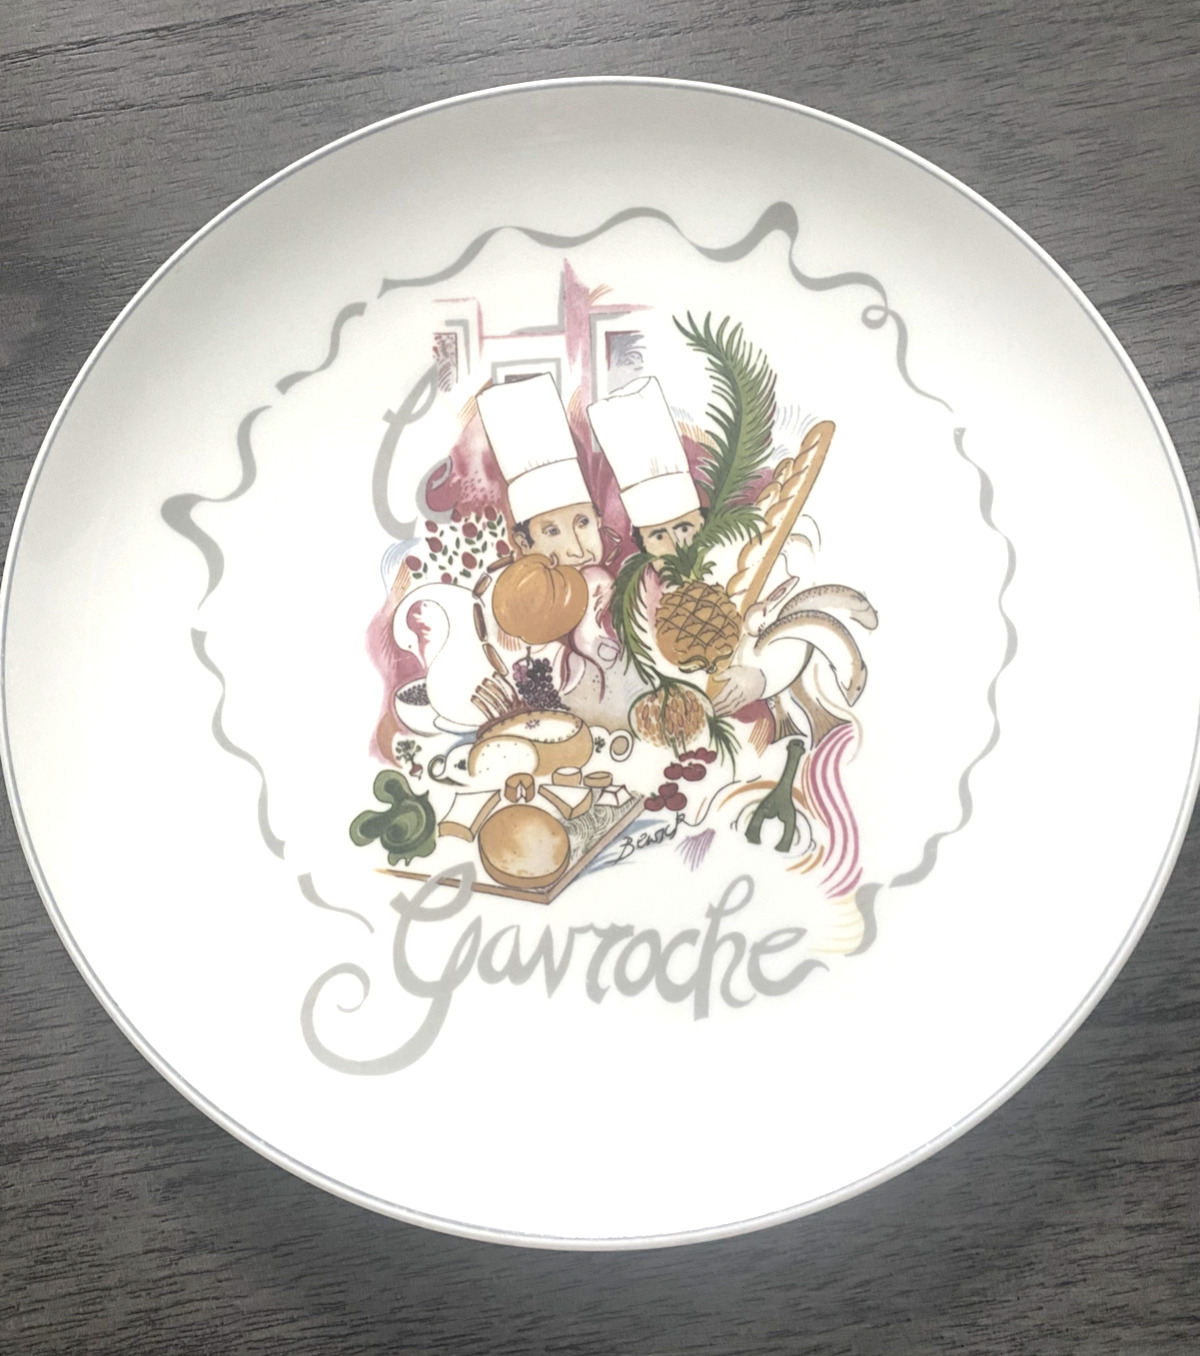 La Gavroche Wedgwood plates, set of 4